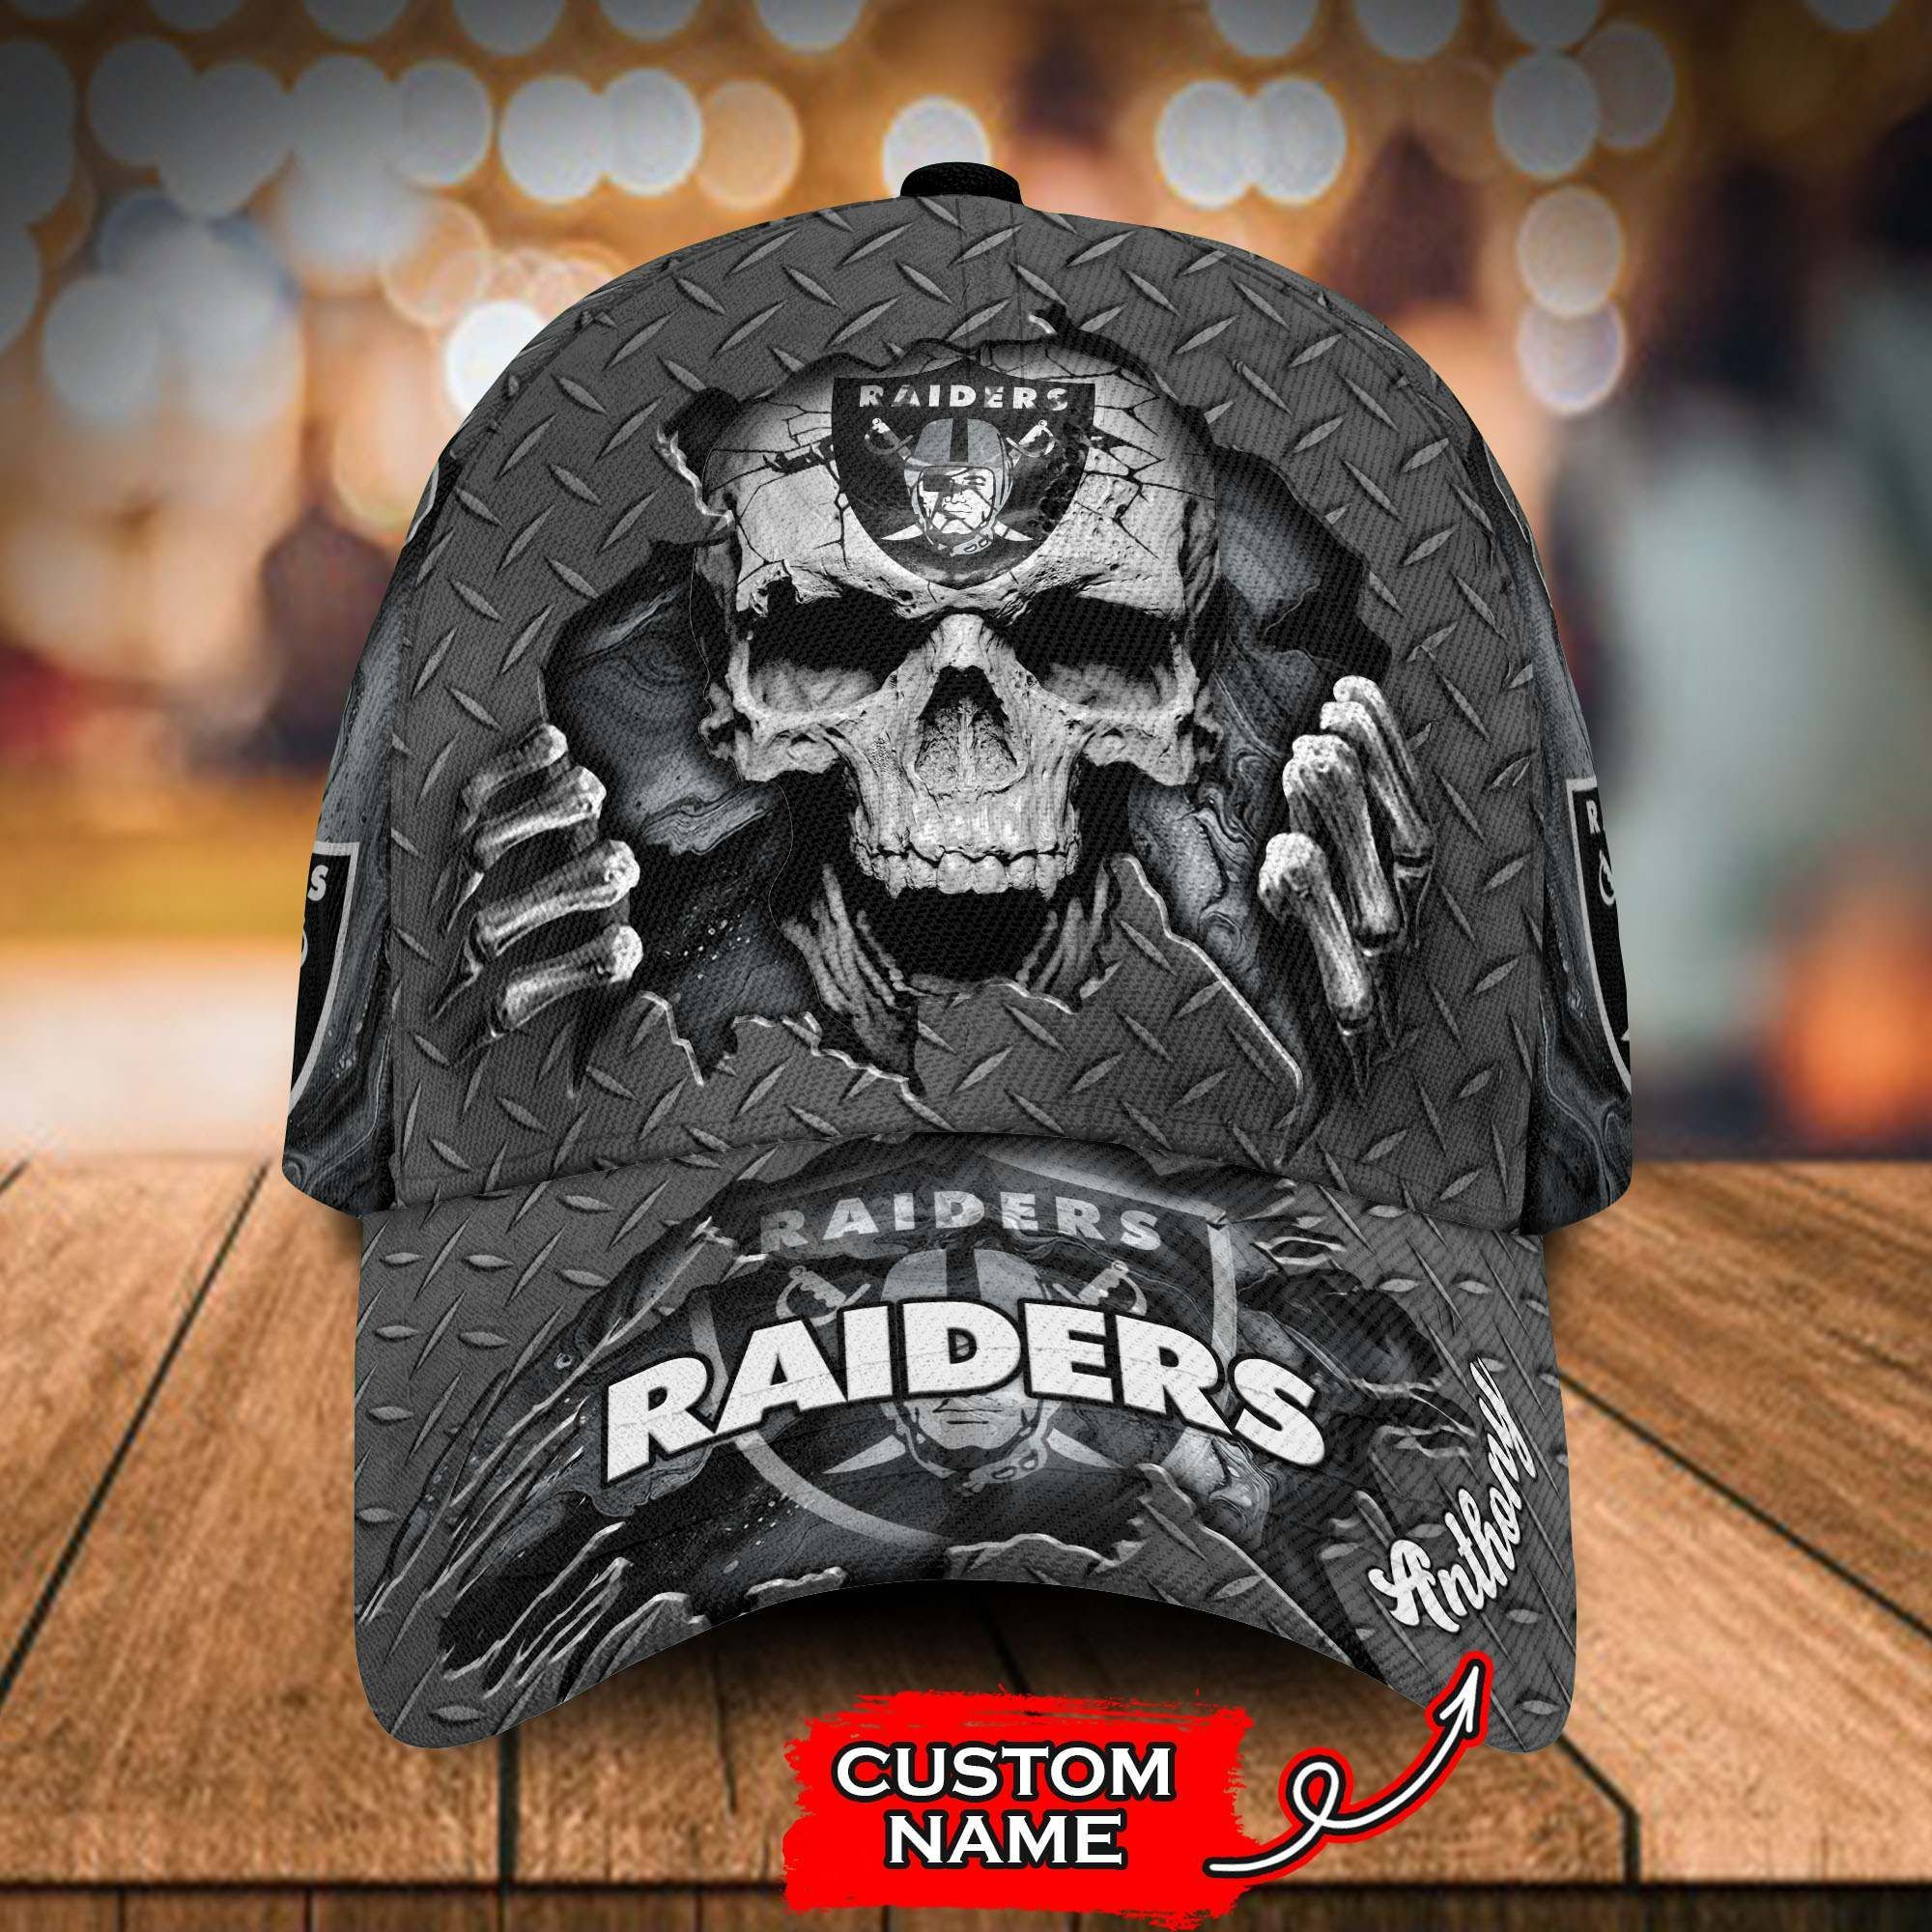 Personalized NFL Las Vegas Raiders Skull Hat Cap - Tagotee